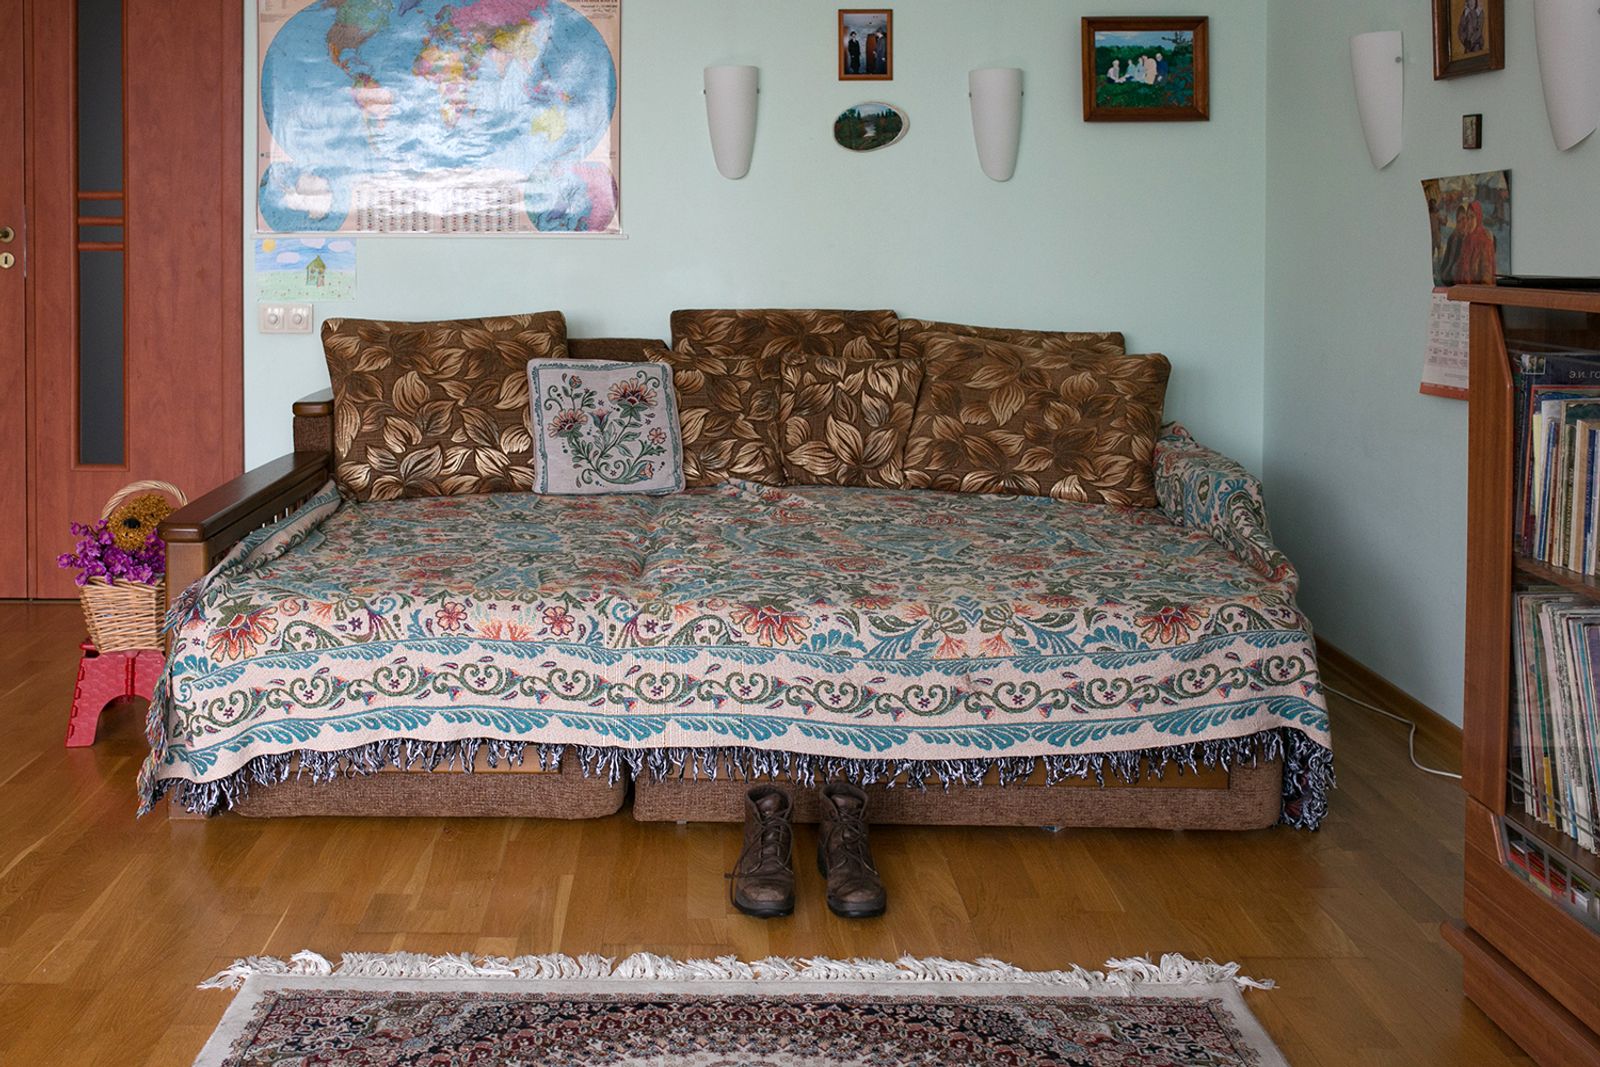 © Elena Pavlova - ‘Father will sleep here when he returns’, says mother.